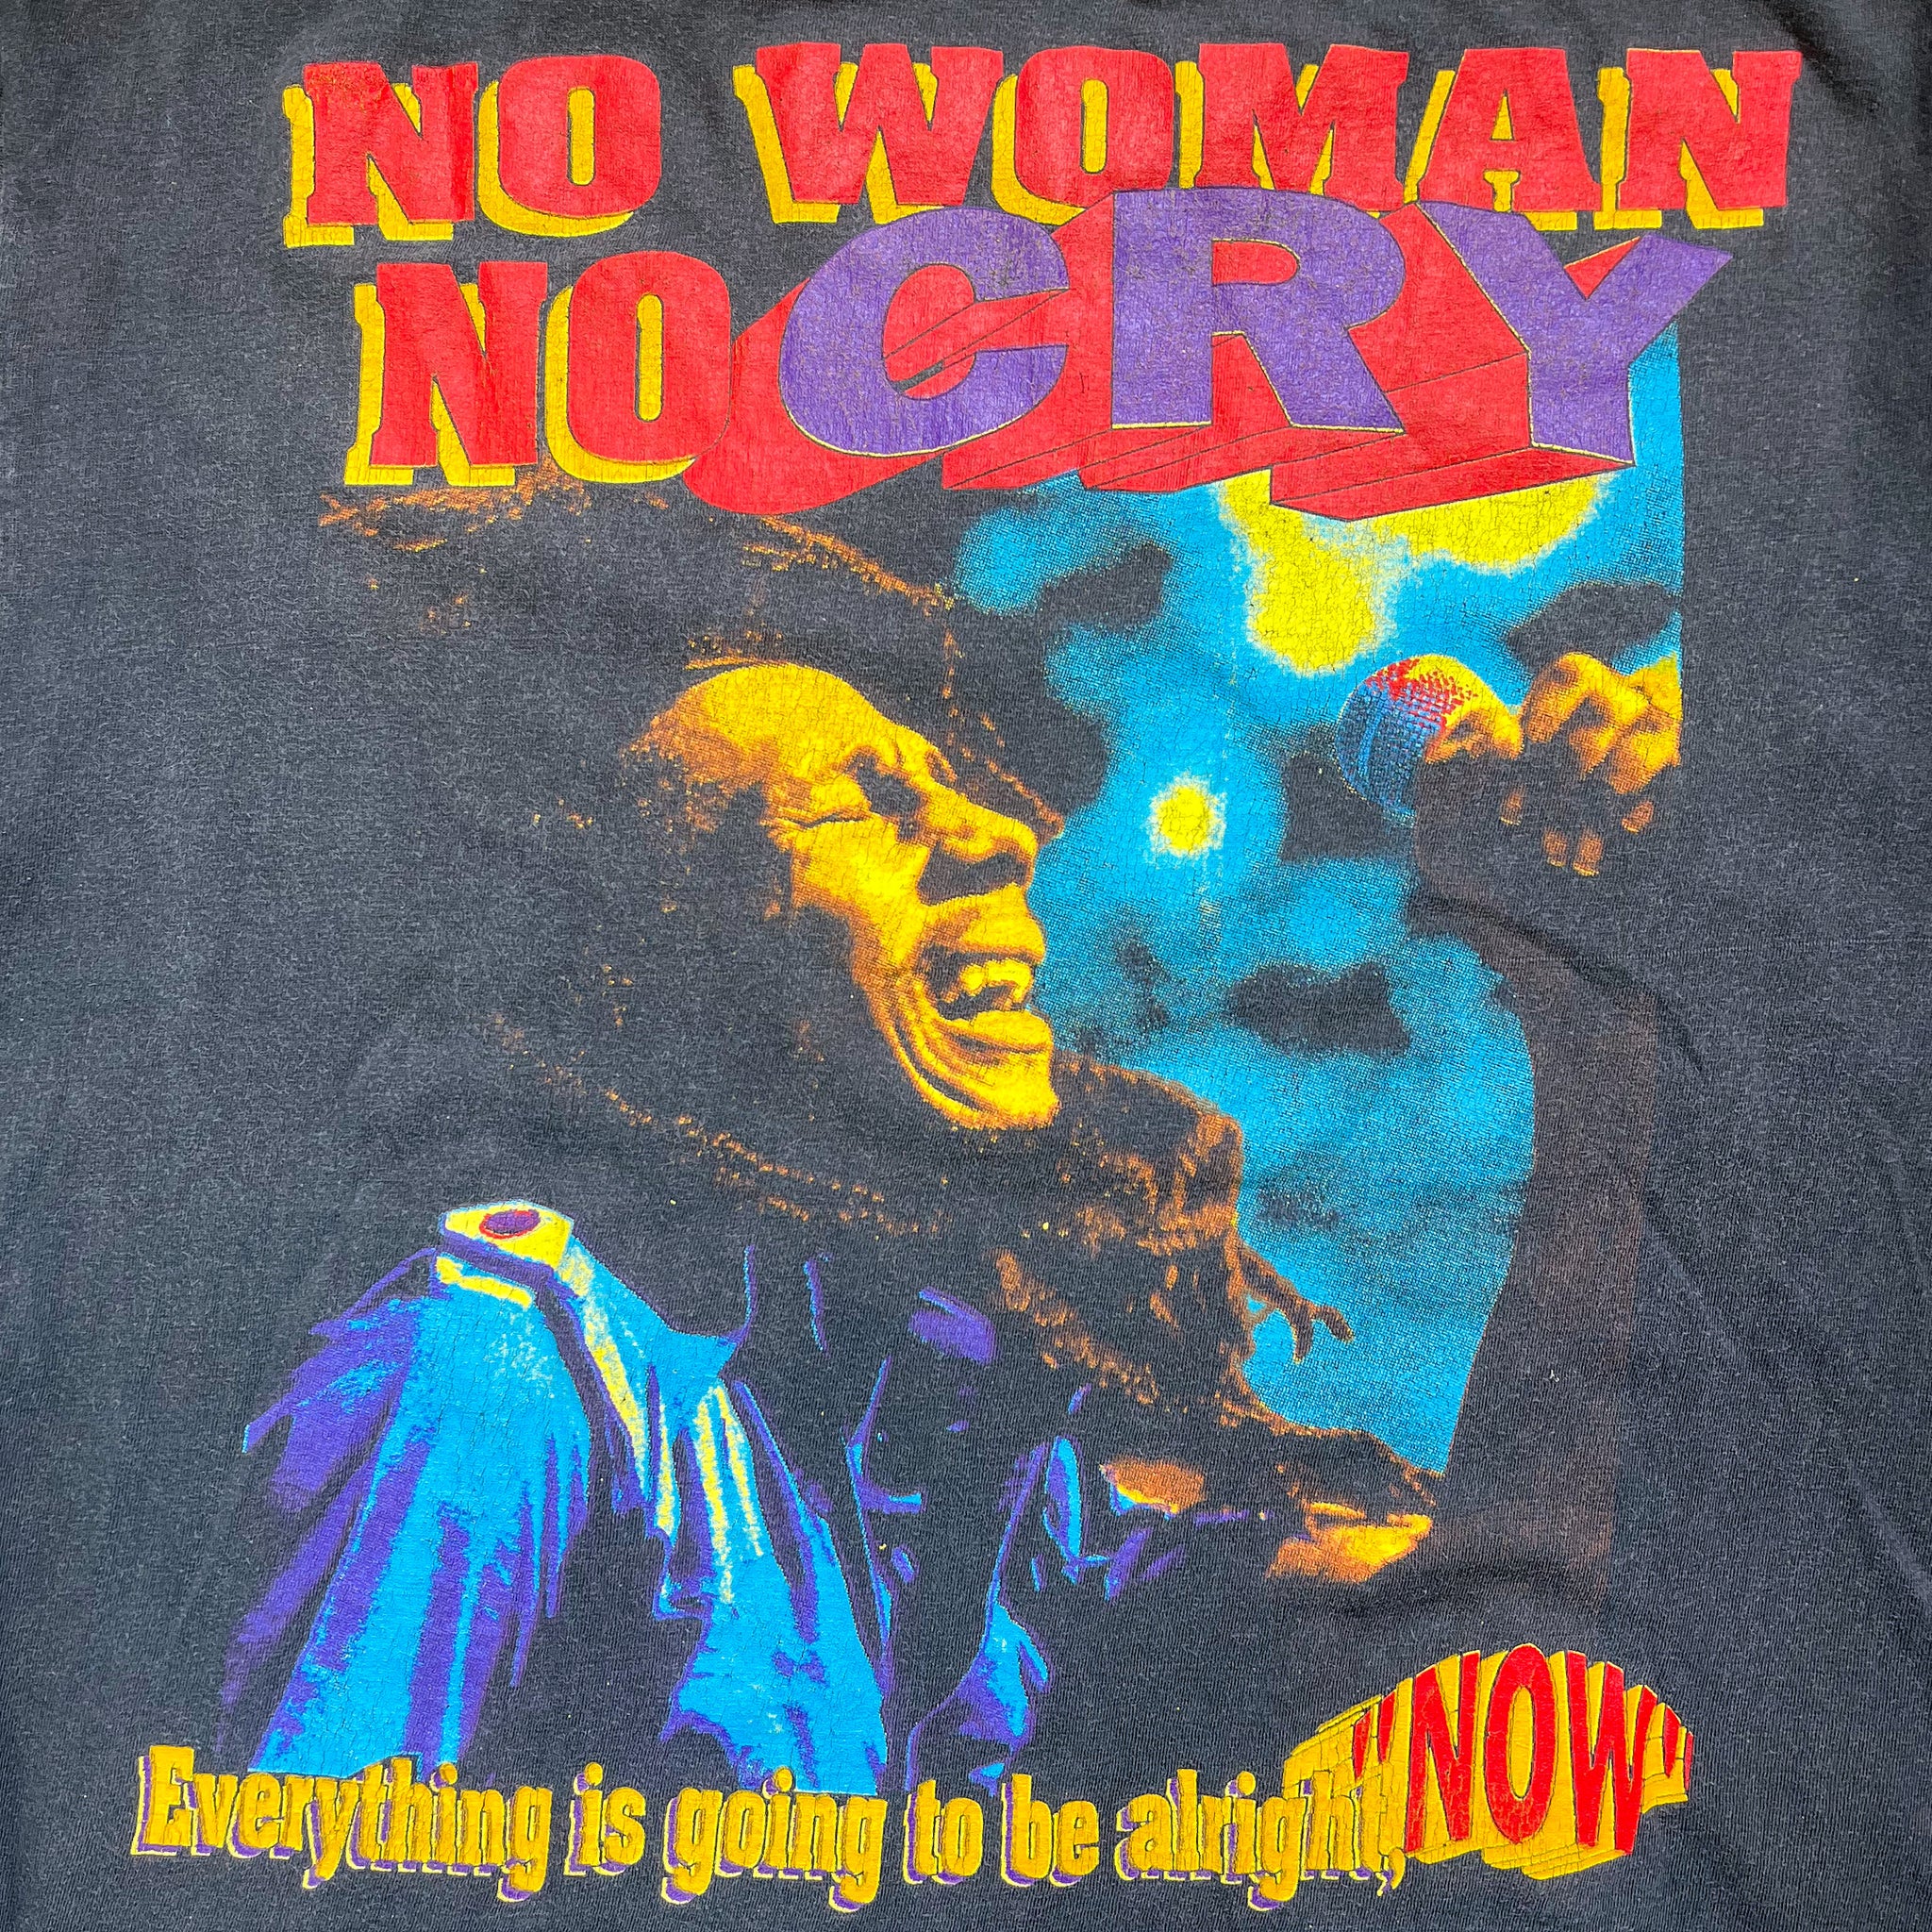 No Woman No Cry White T-Shirt